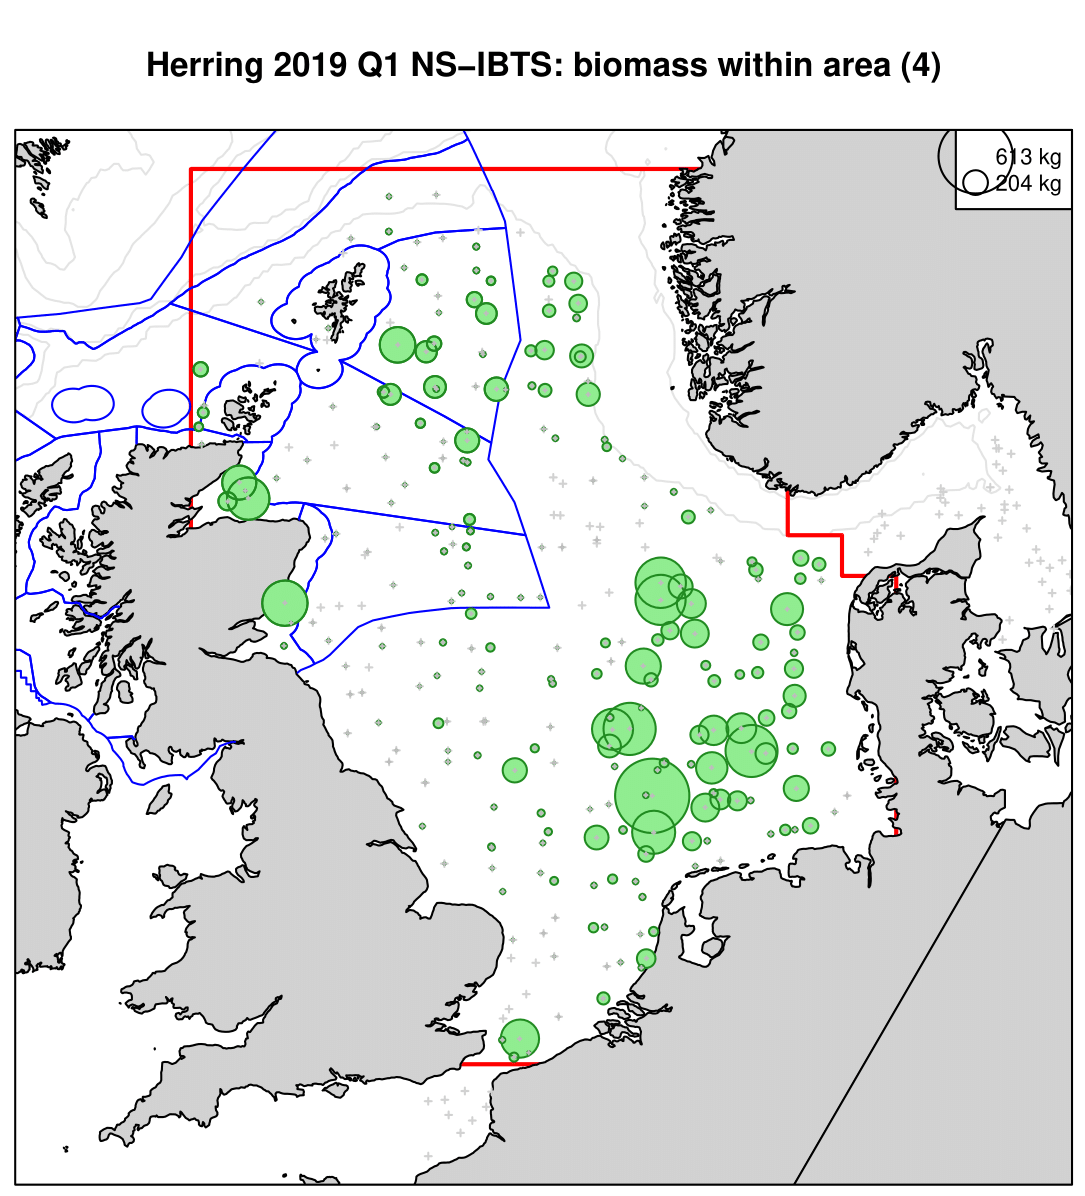 Herring 2019 Q1 NS-IBTS: biomass within area (4)